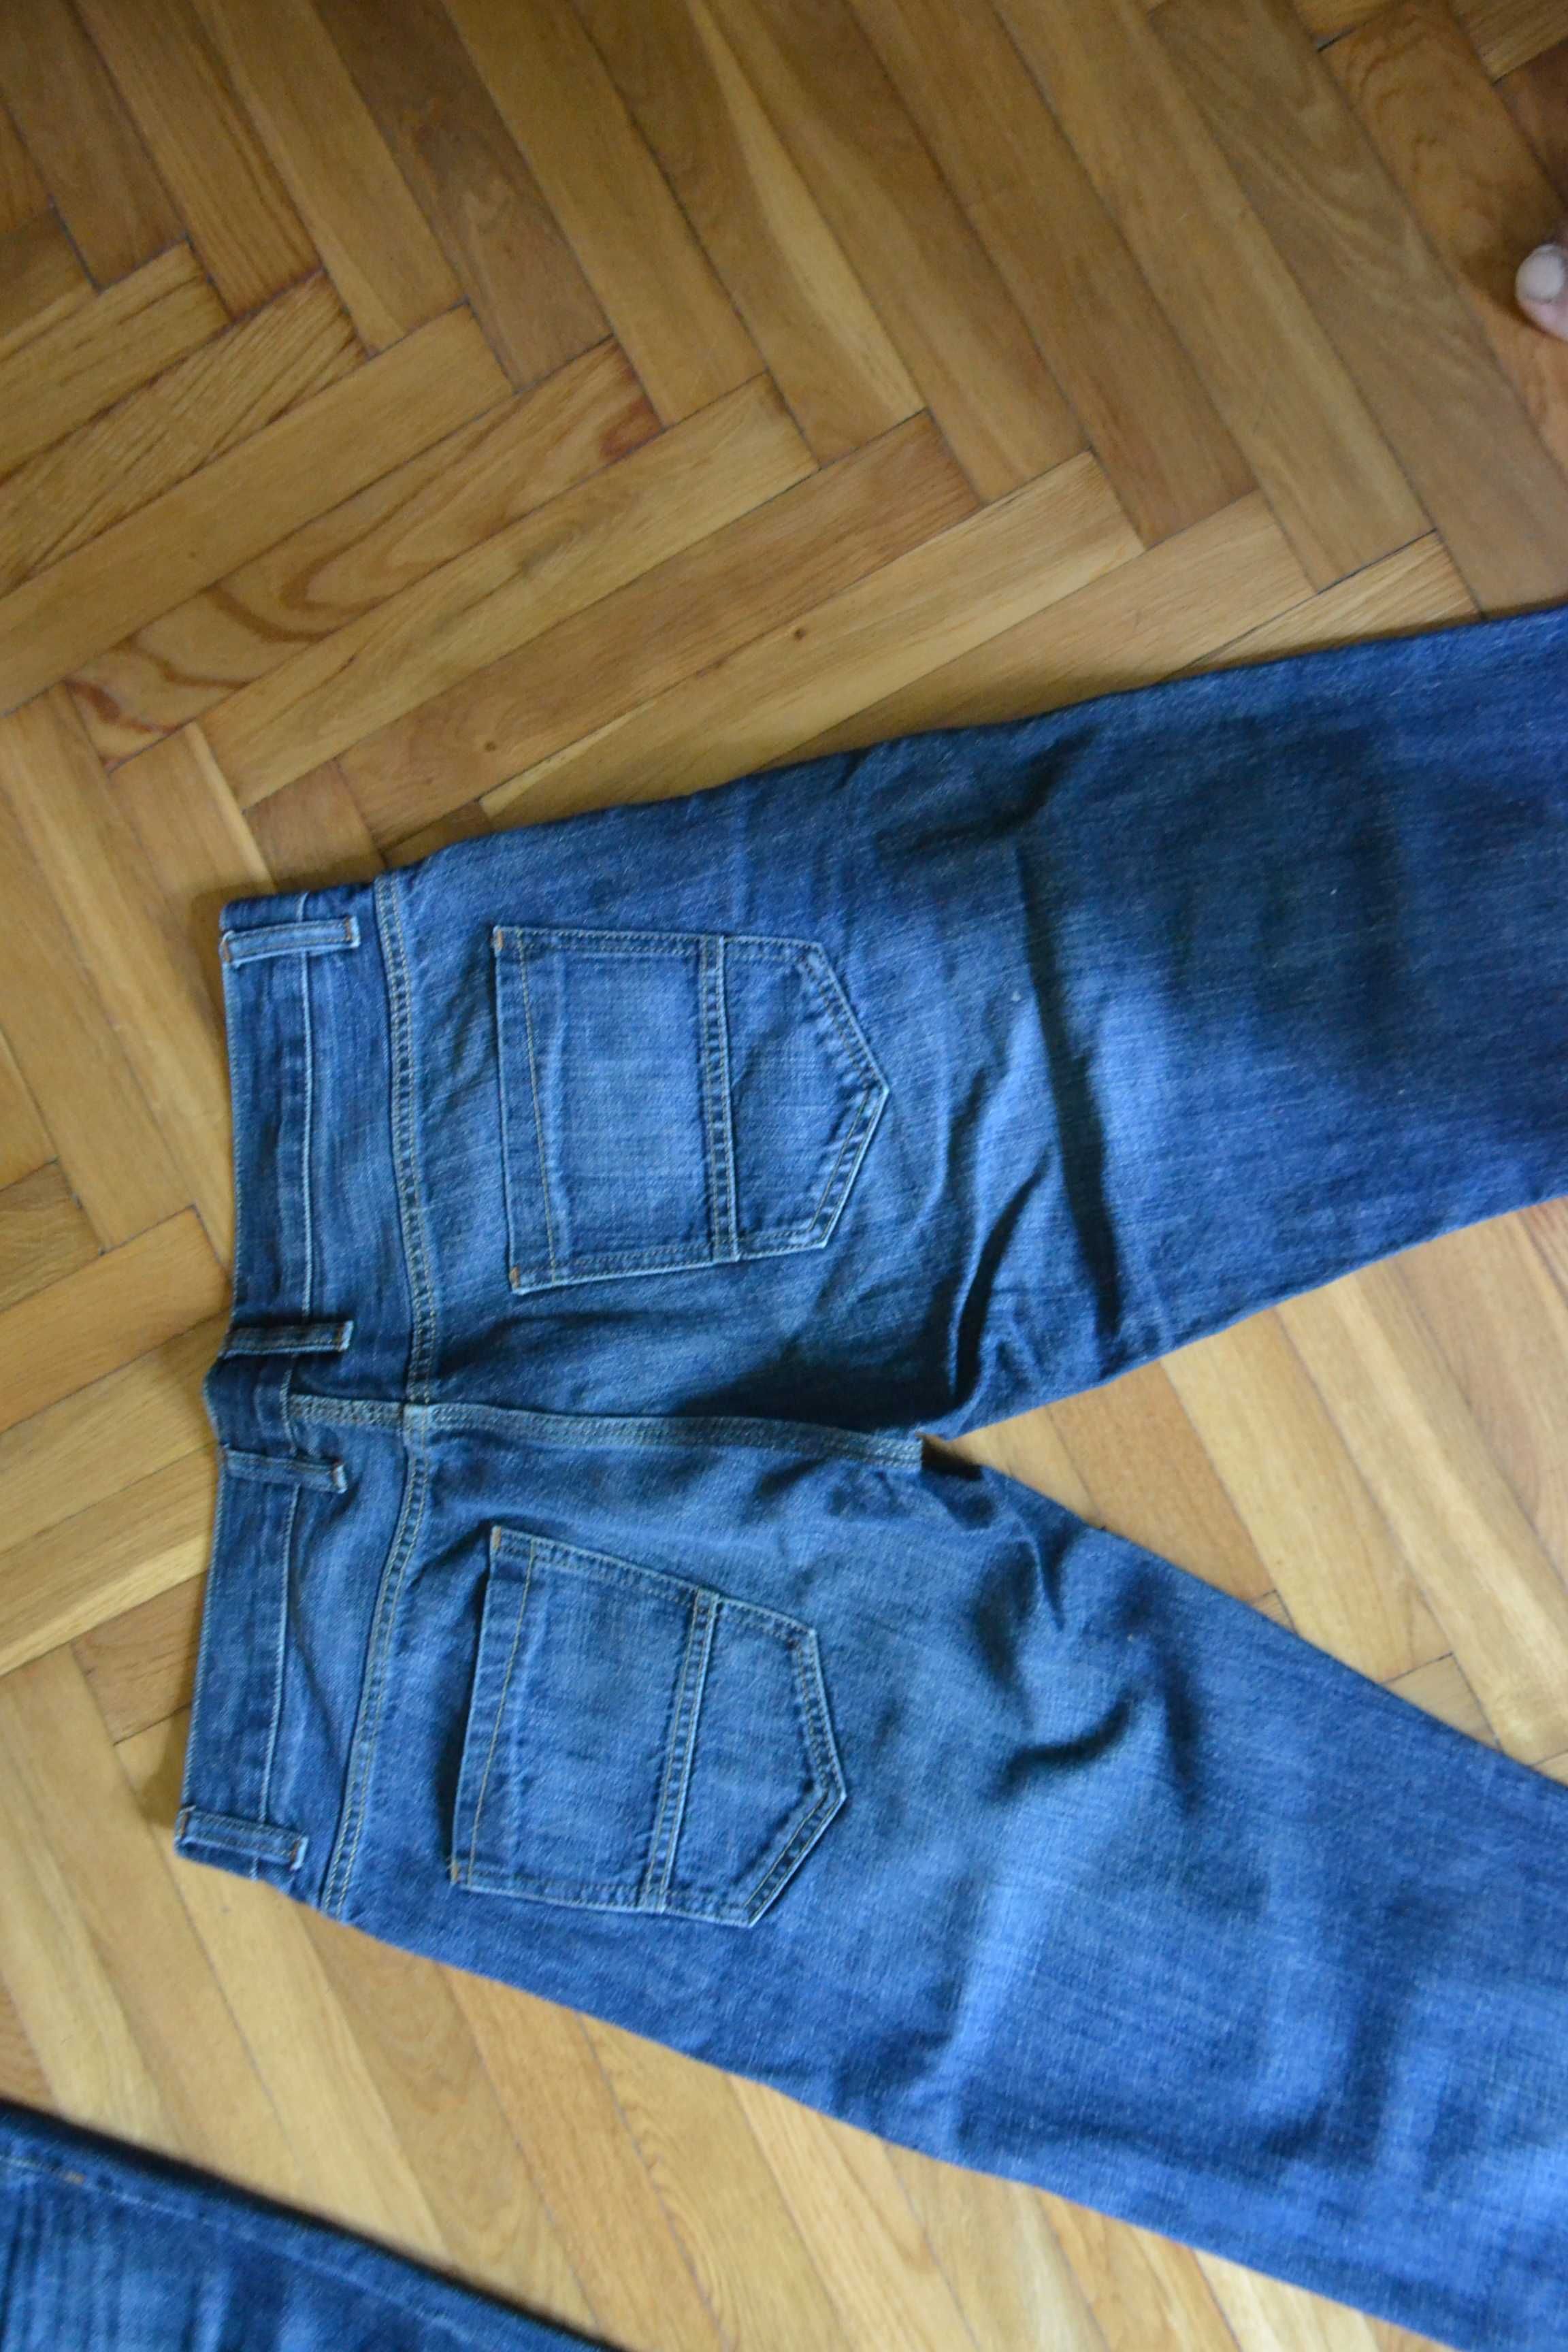 jeansy, dżinsy spodnie męskie 30,31-32,-34